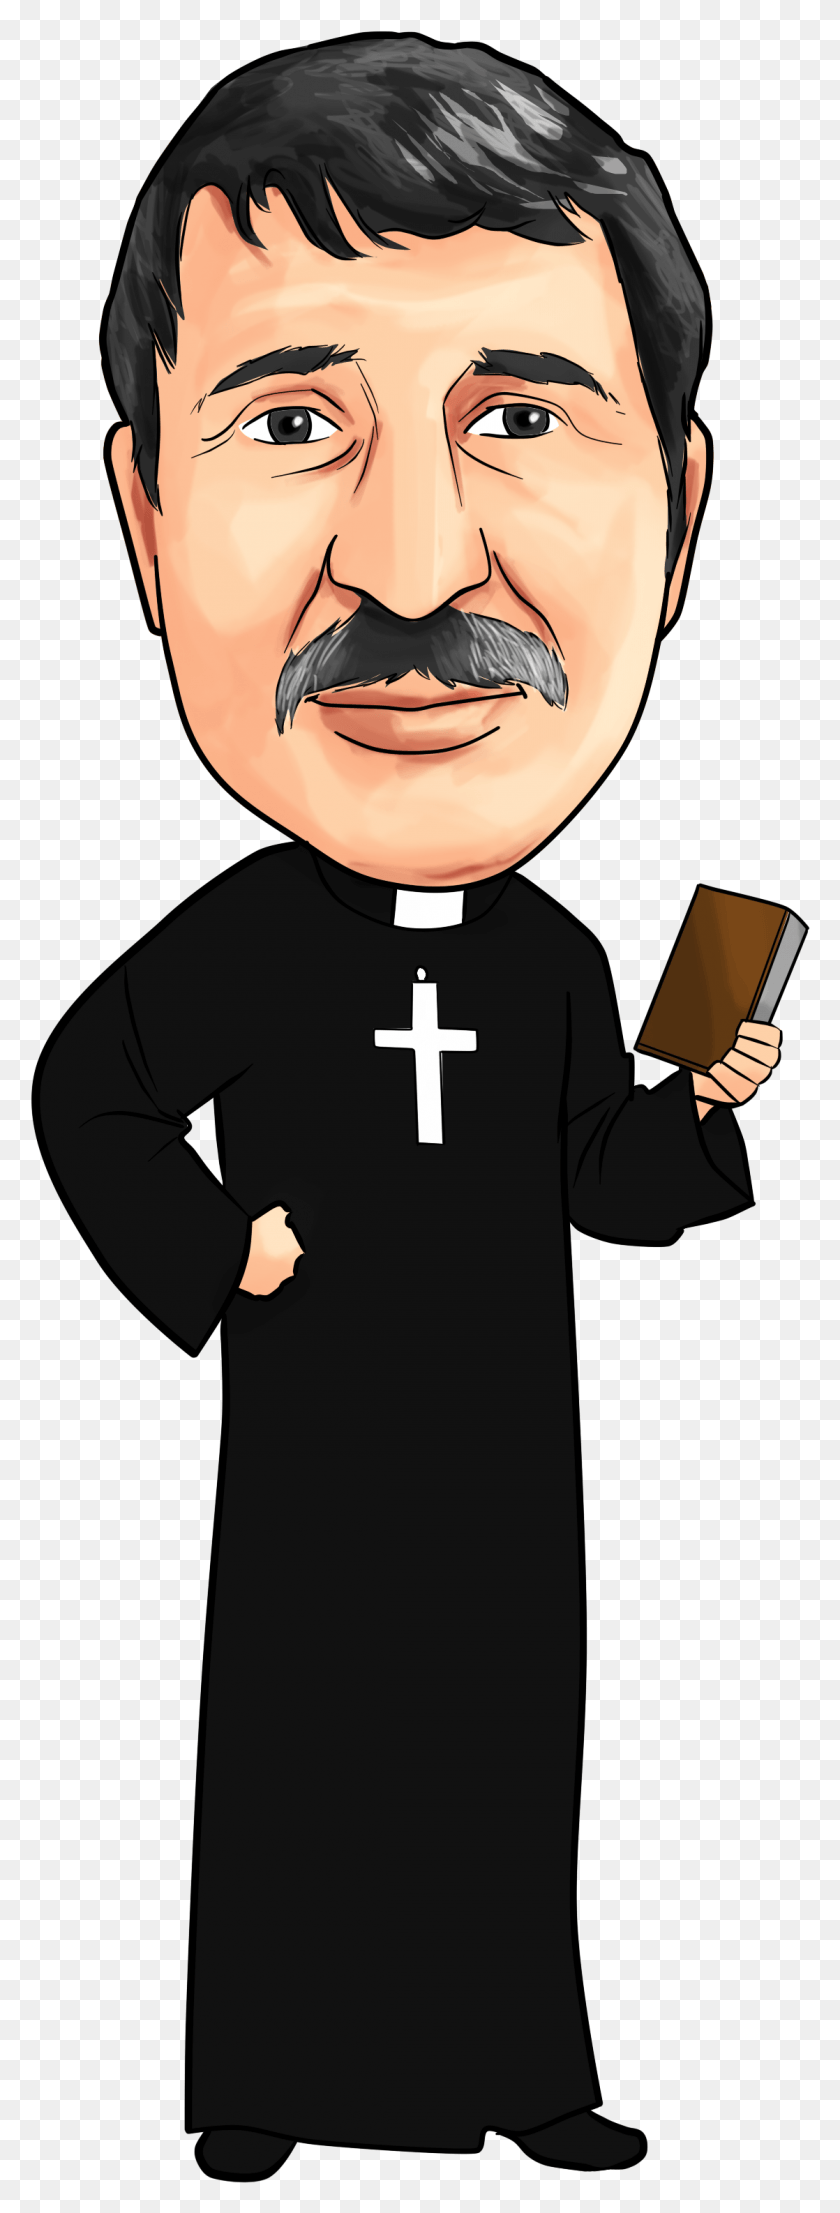 1118x3087 Sacerdote Caricatura Caricatura De Un Sacerdote Persona Humana Obispo Hd Png Descargar